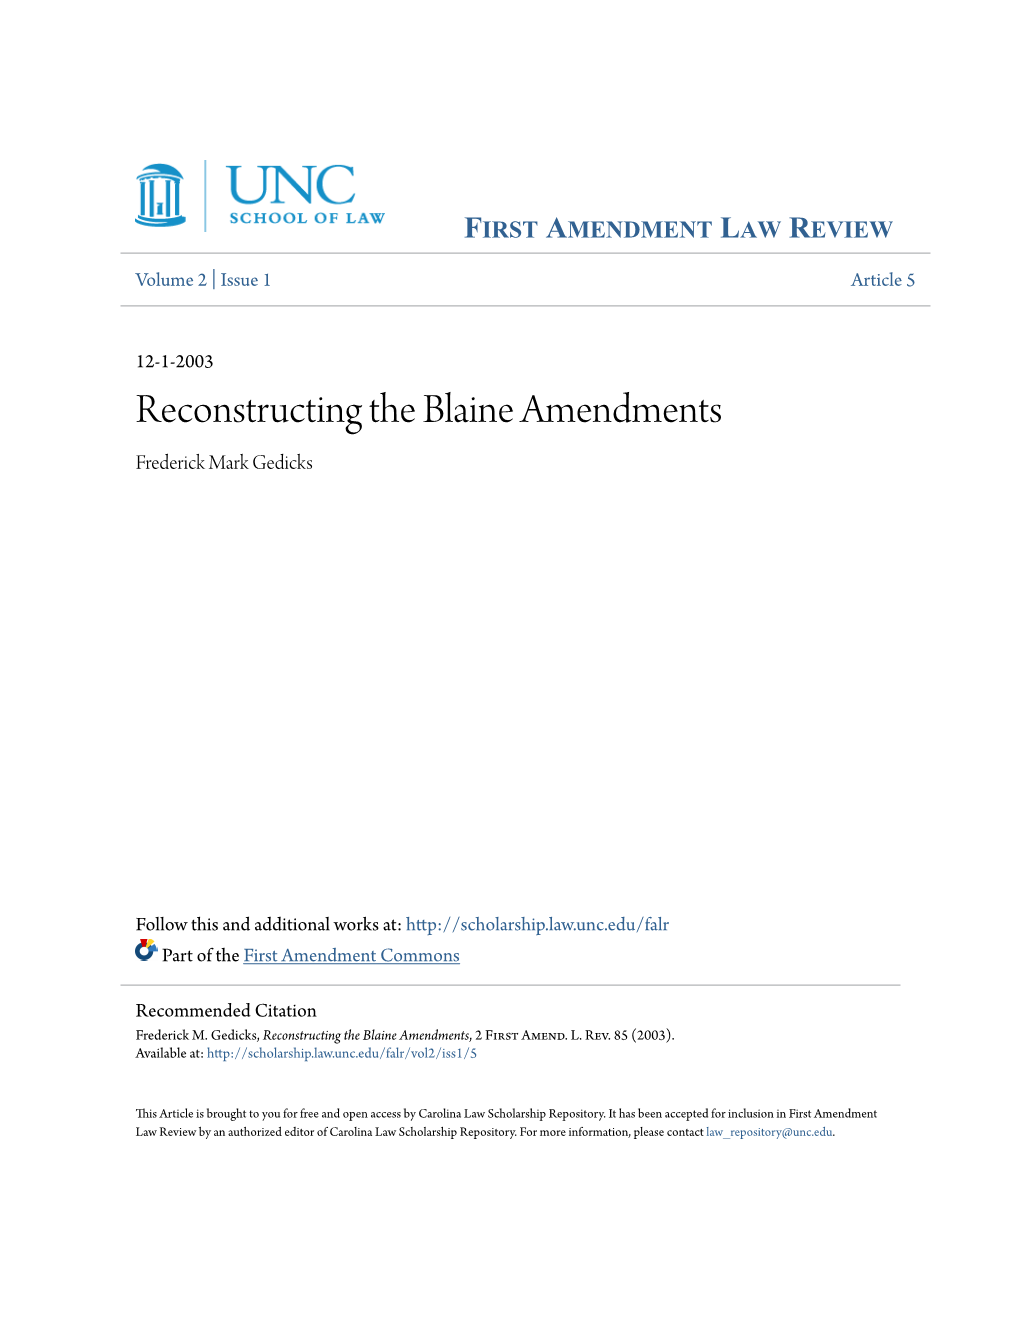 Reconstructing the Blaine Amendments Frederick Mark Gedicks